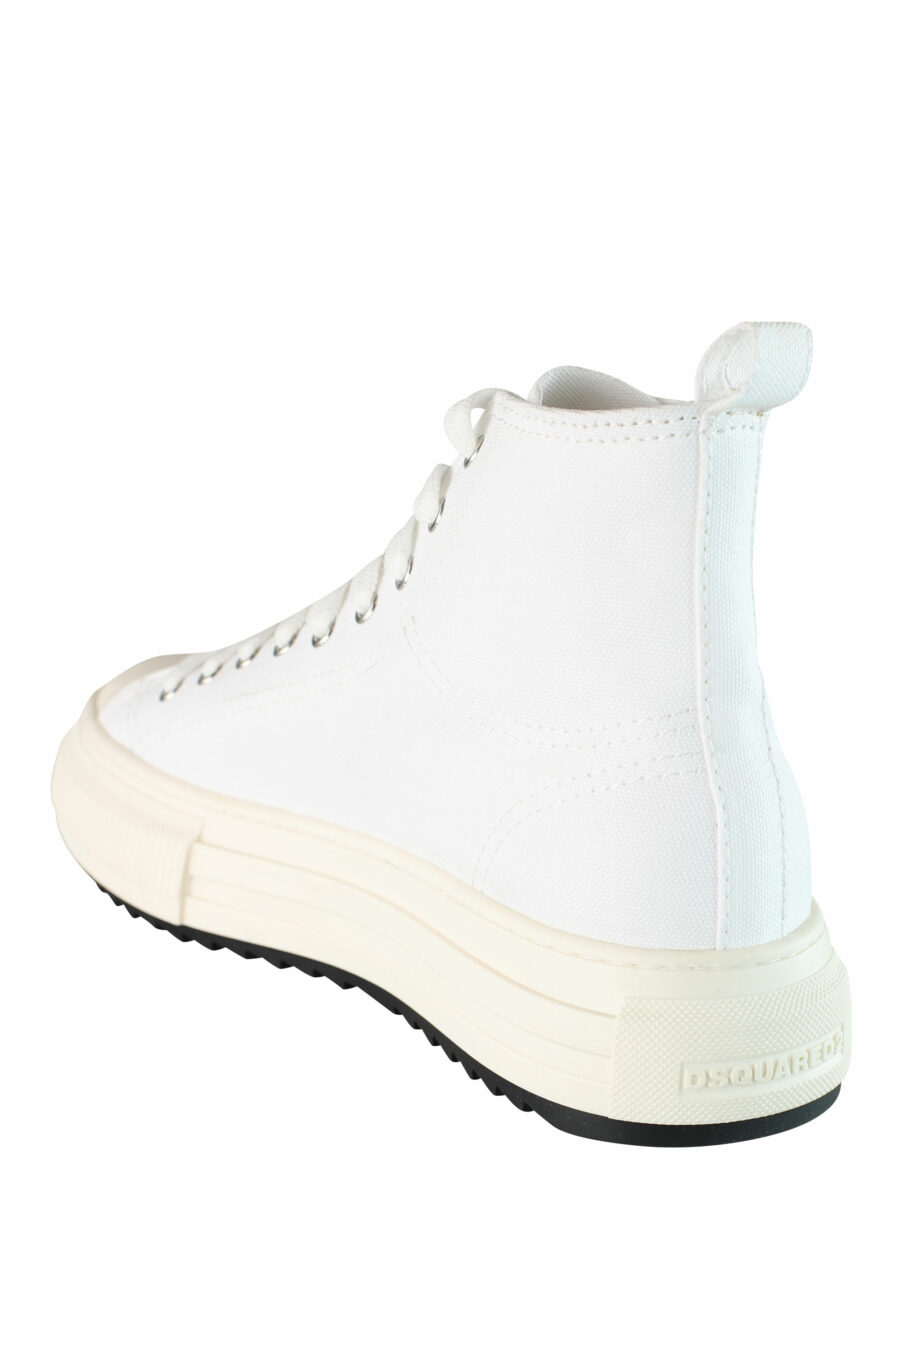 Zapatillas blancas estilo botin con plataforma y logo mini - IMG 1500